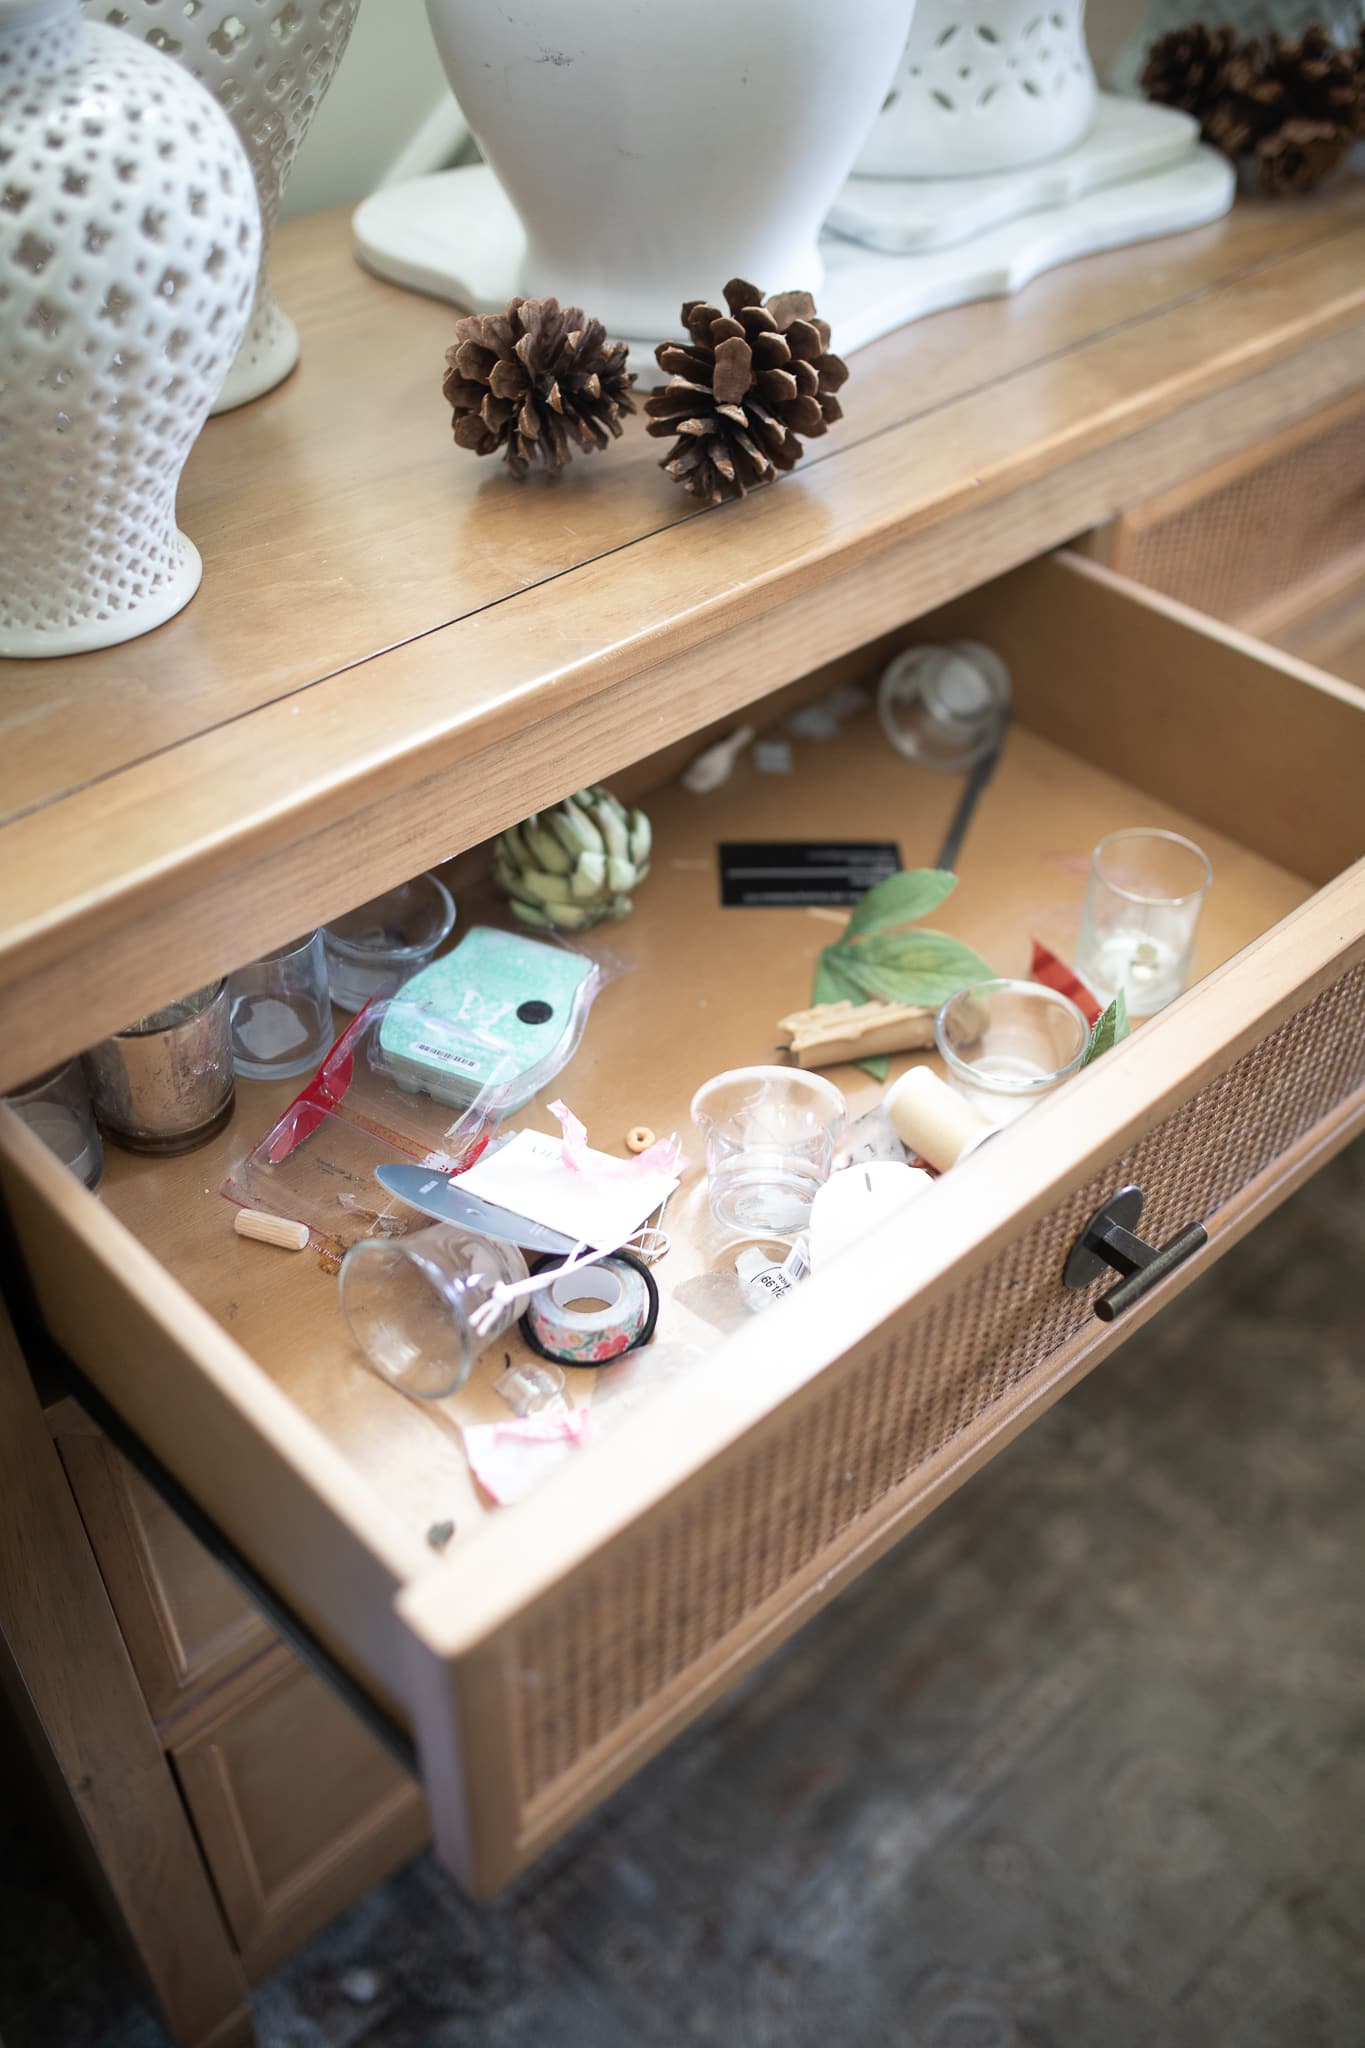 Messy junk drawer